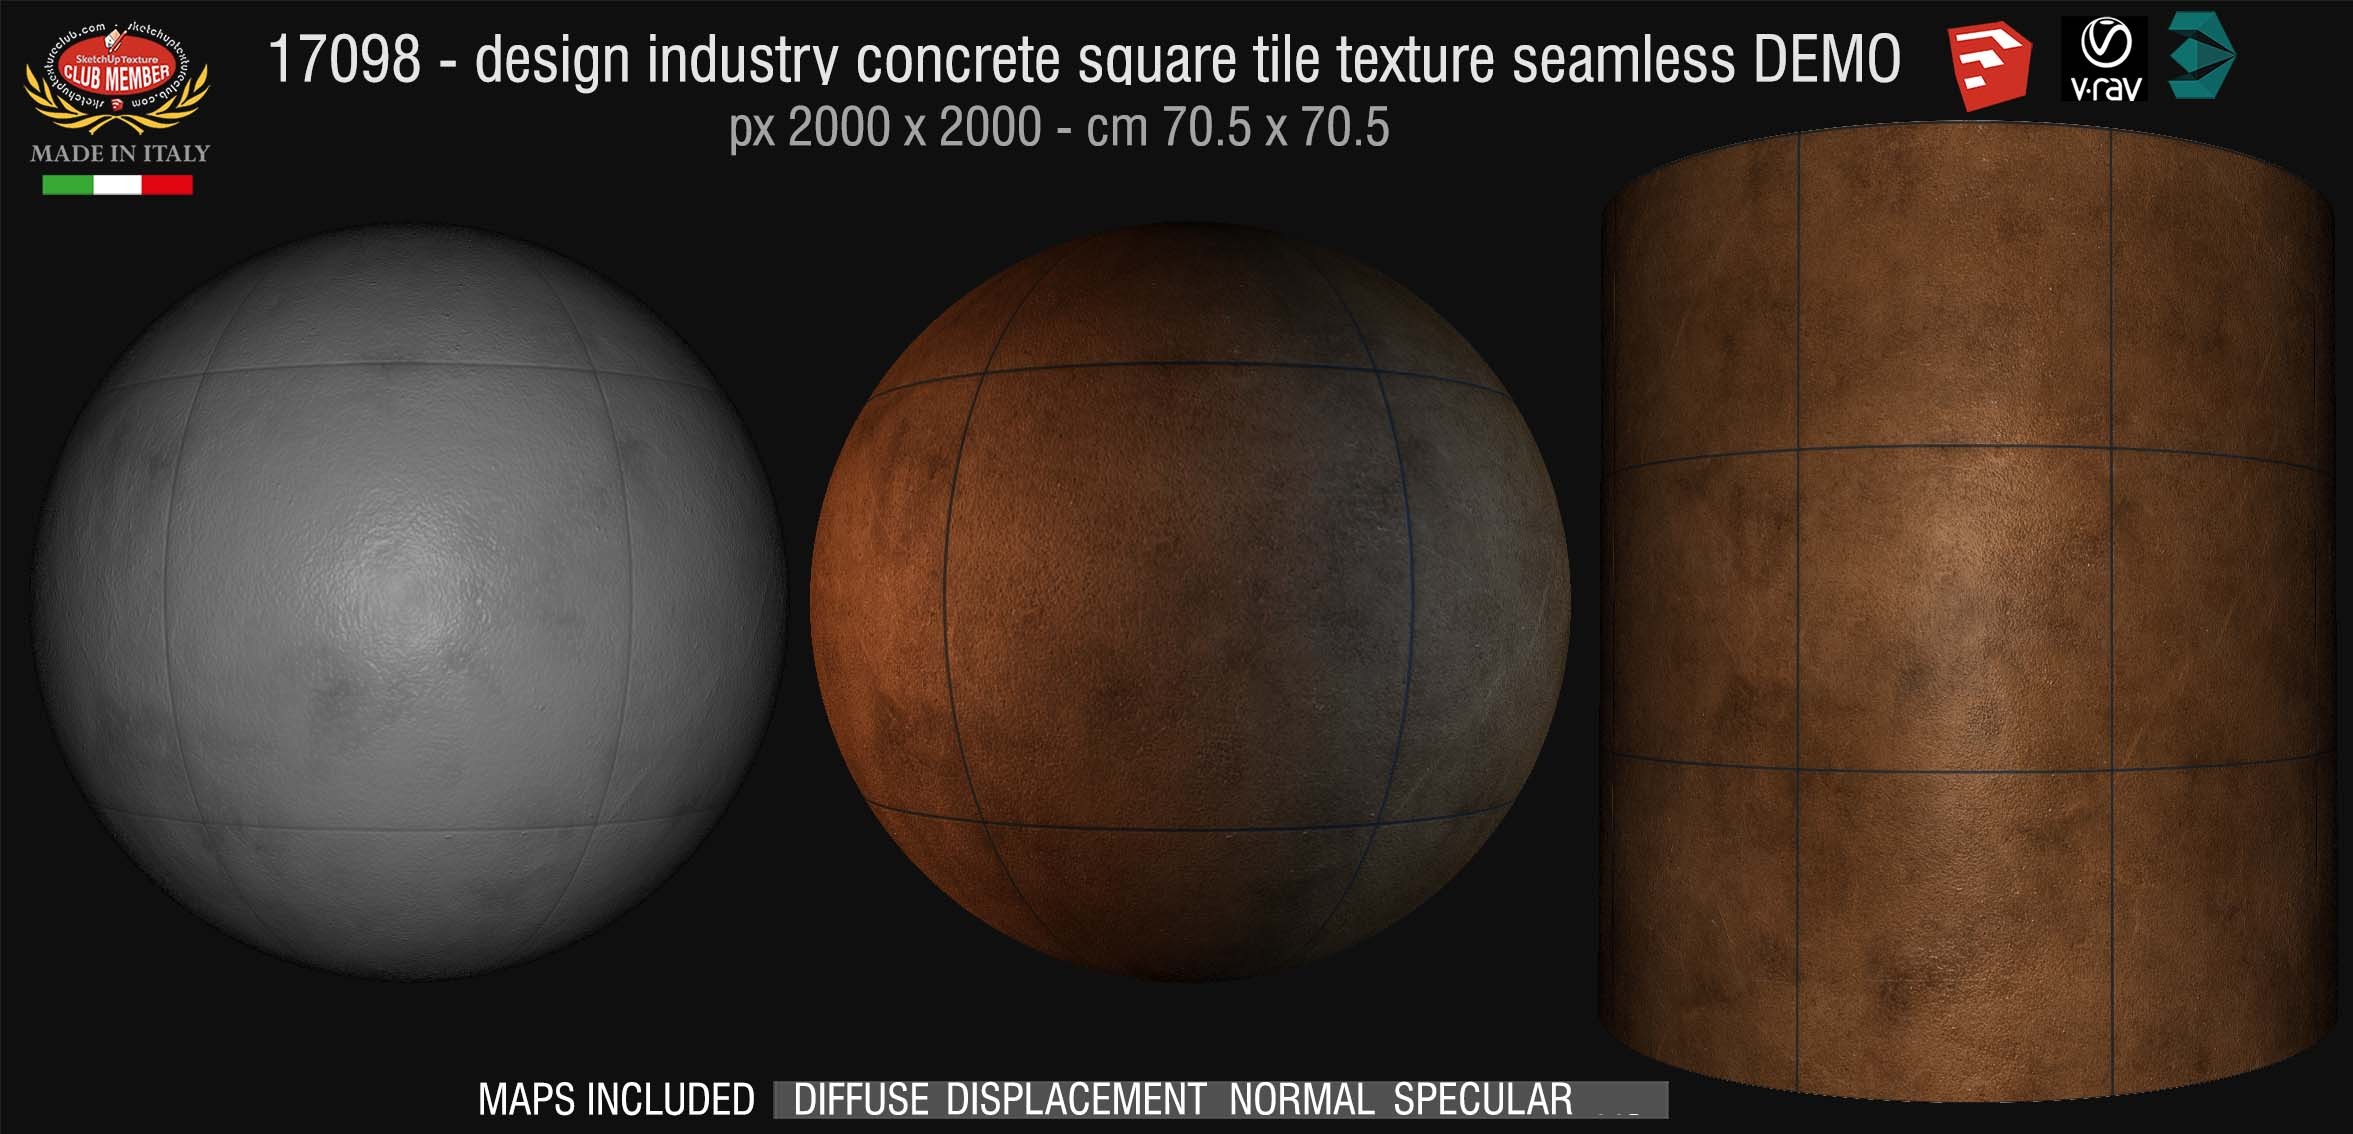 17098 HR Design industry concrete square tile texture seamless + maps DEMO